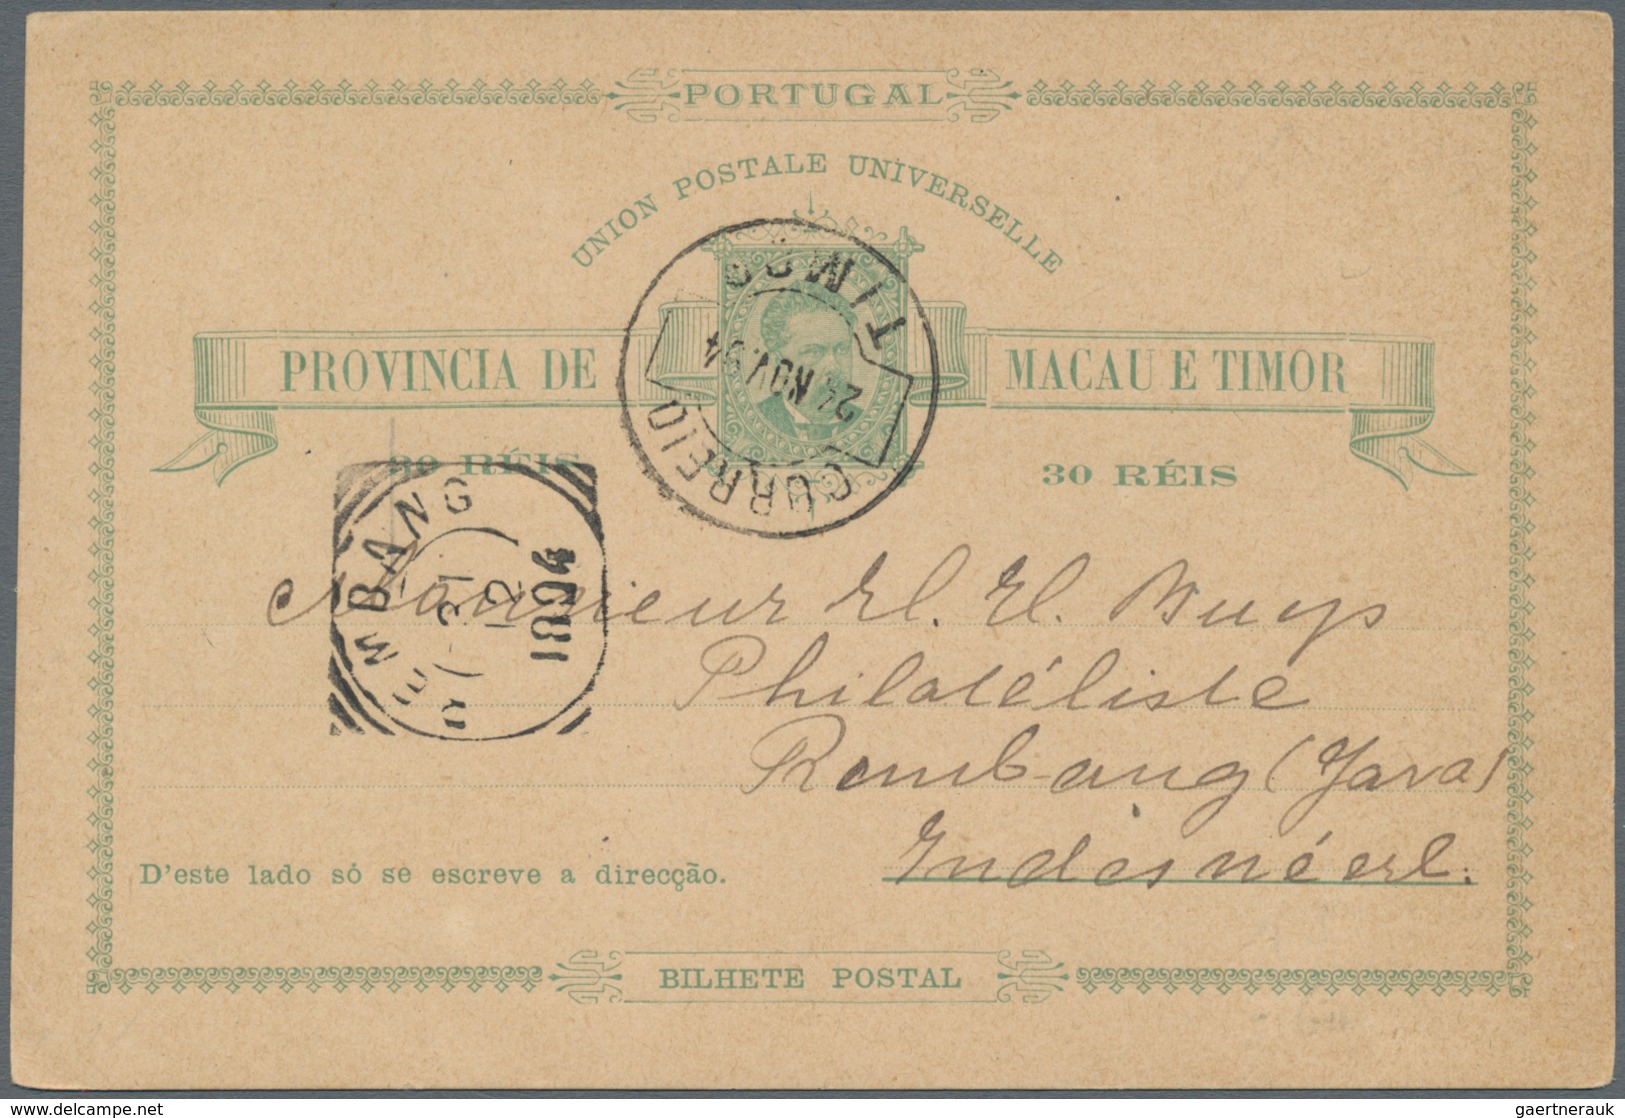 Timor: 1894. Timor Postal Stationery Card 30 Reis Green Cancelled By Timor Date Ate Stamp '24th Nov - Timor Orientale